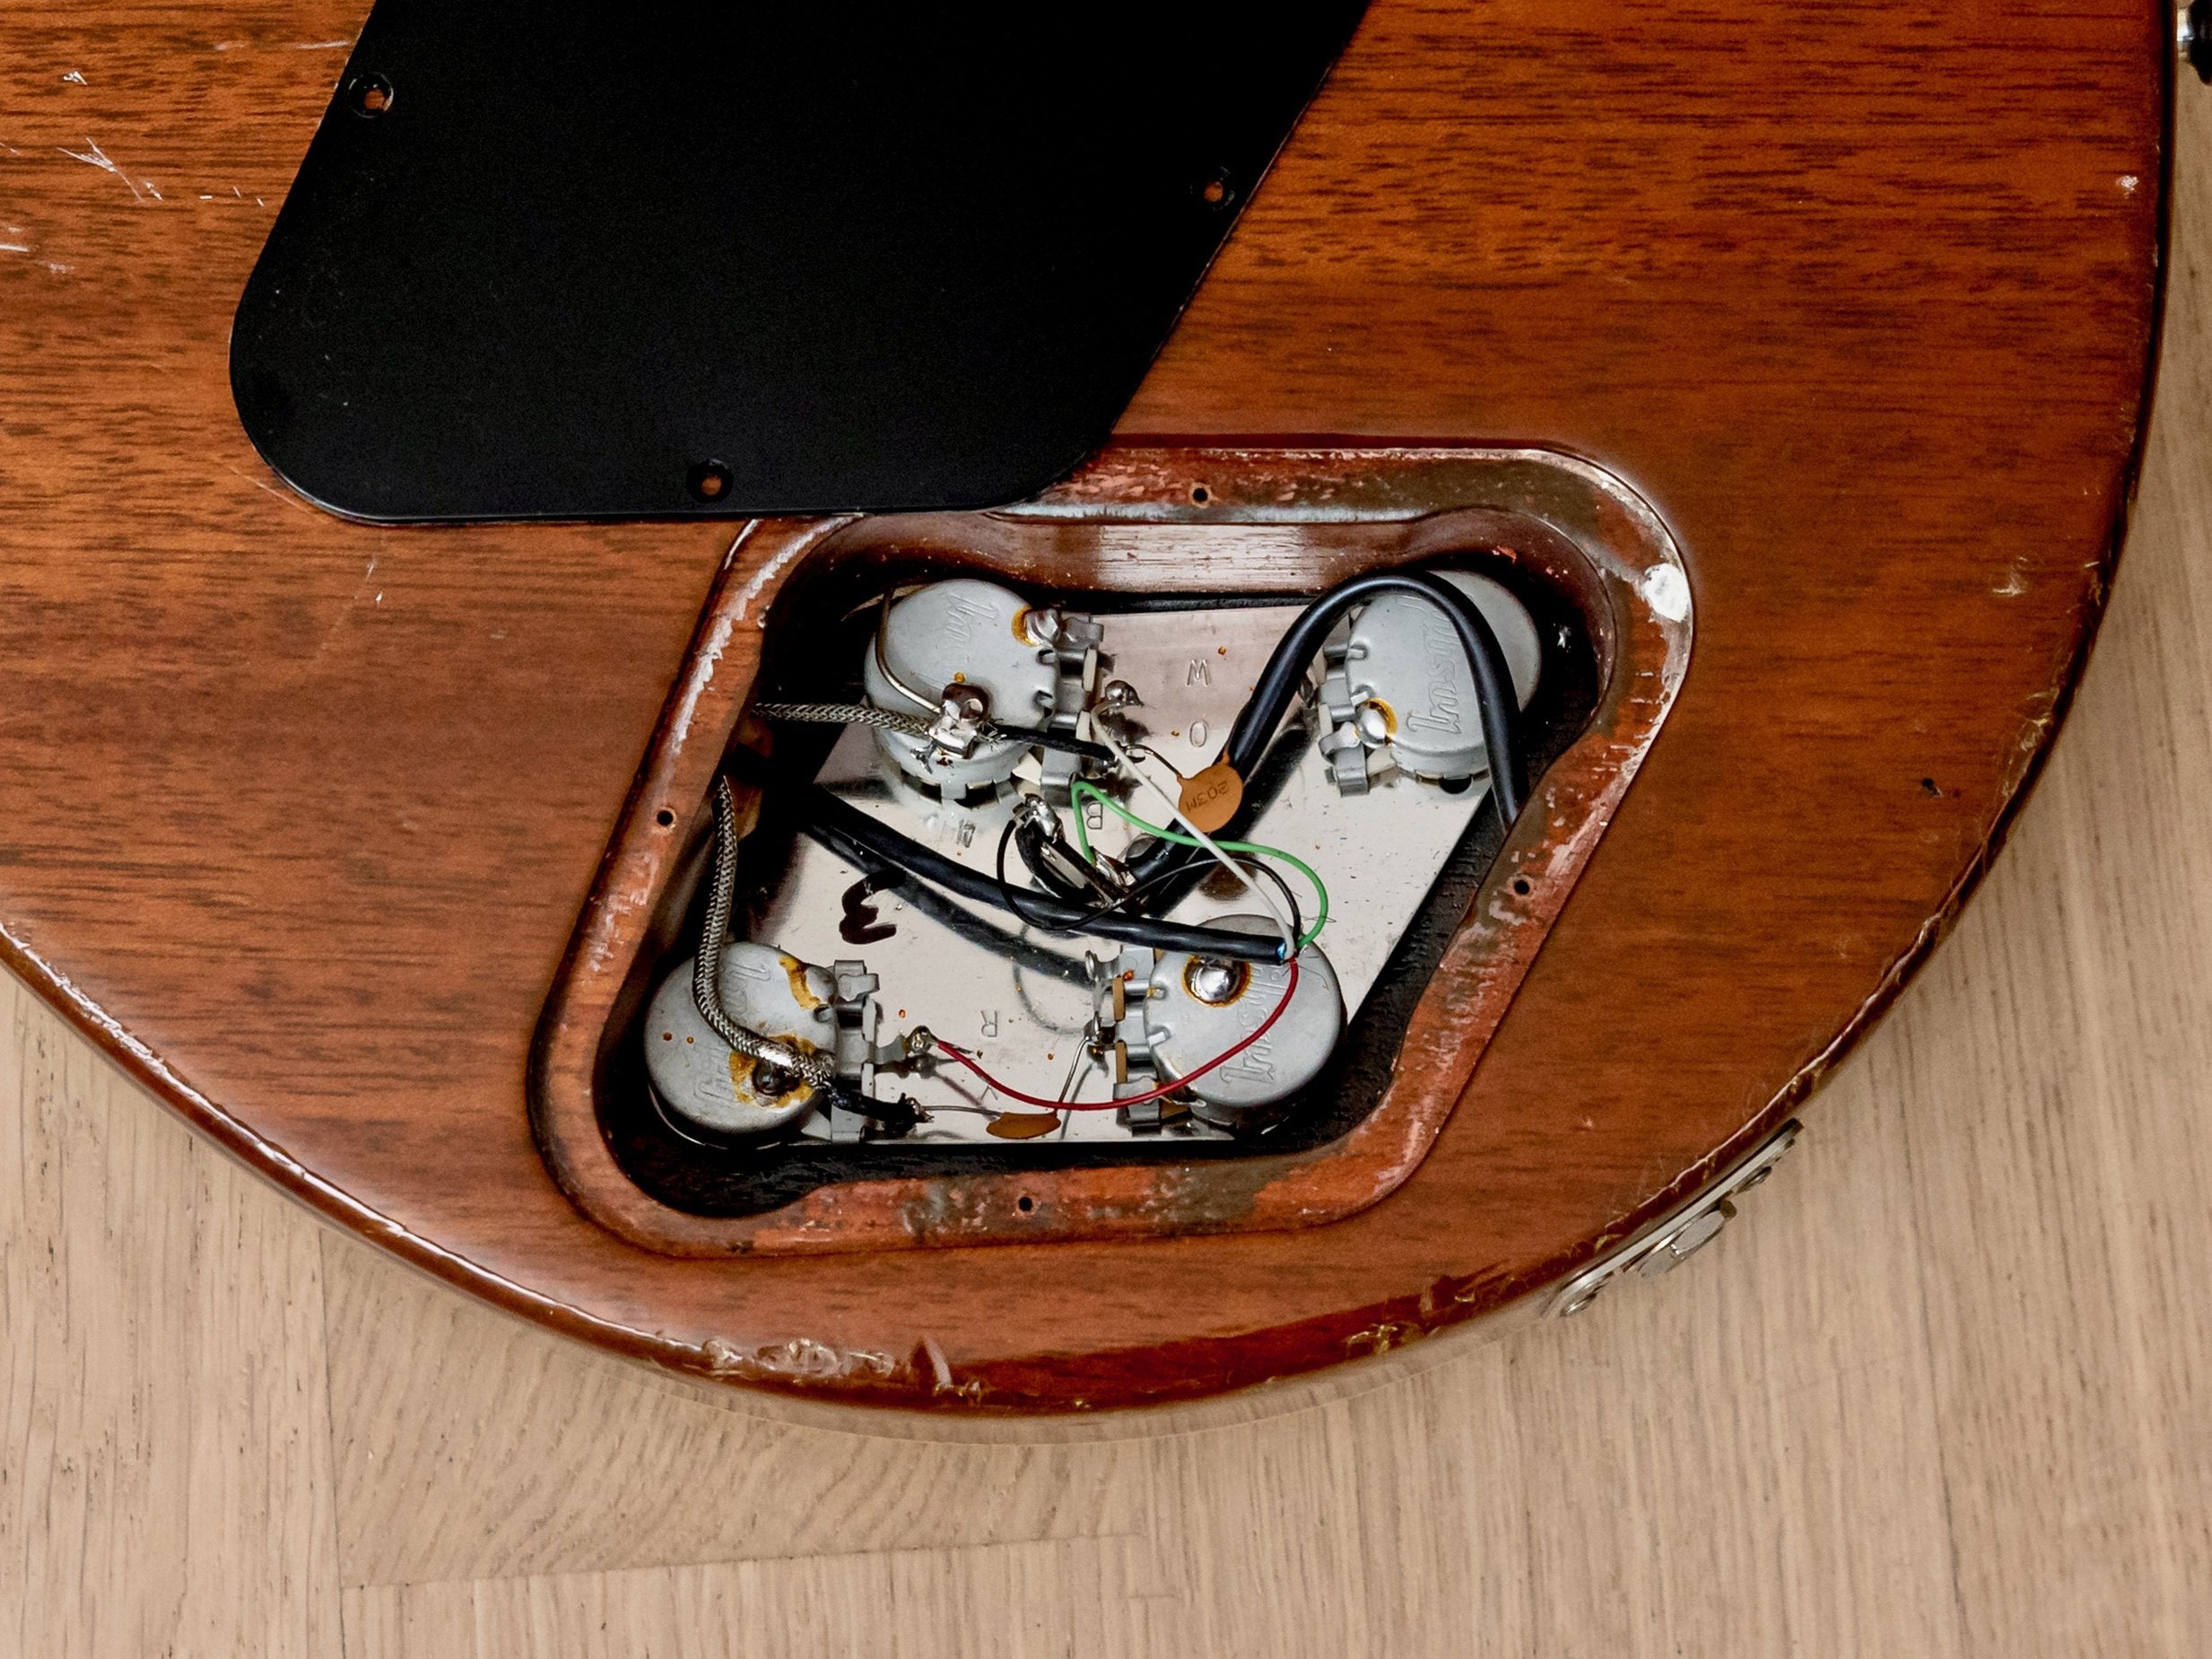 1999 Gibson Les Paul Standard Electric Guitar Honey Burst w/ Case